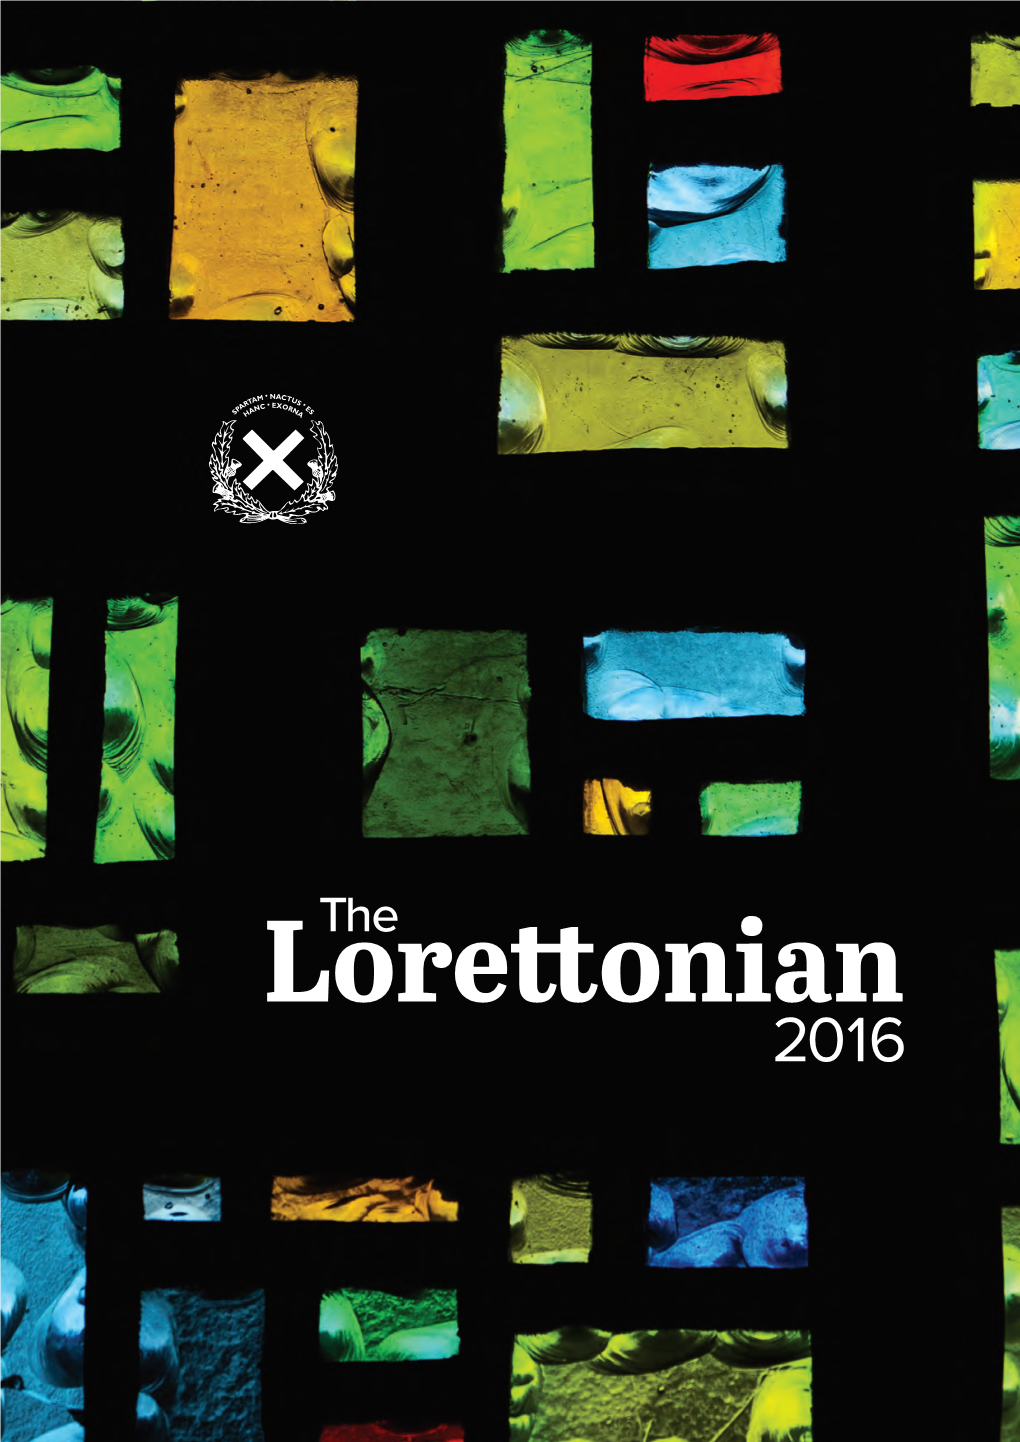 The Lorettonian 2016.Pdf